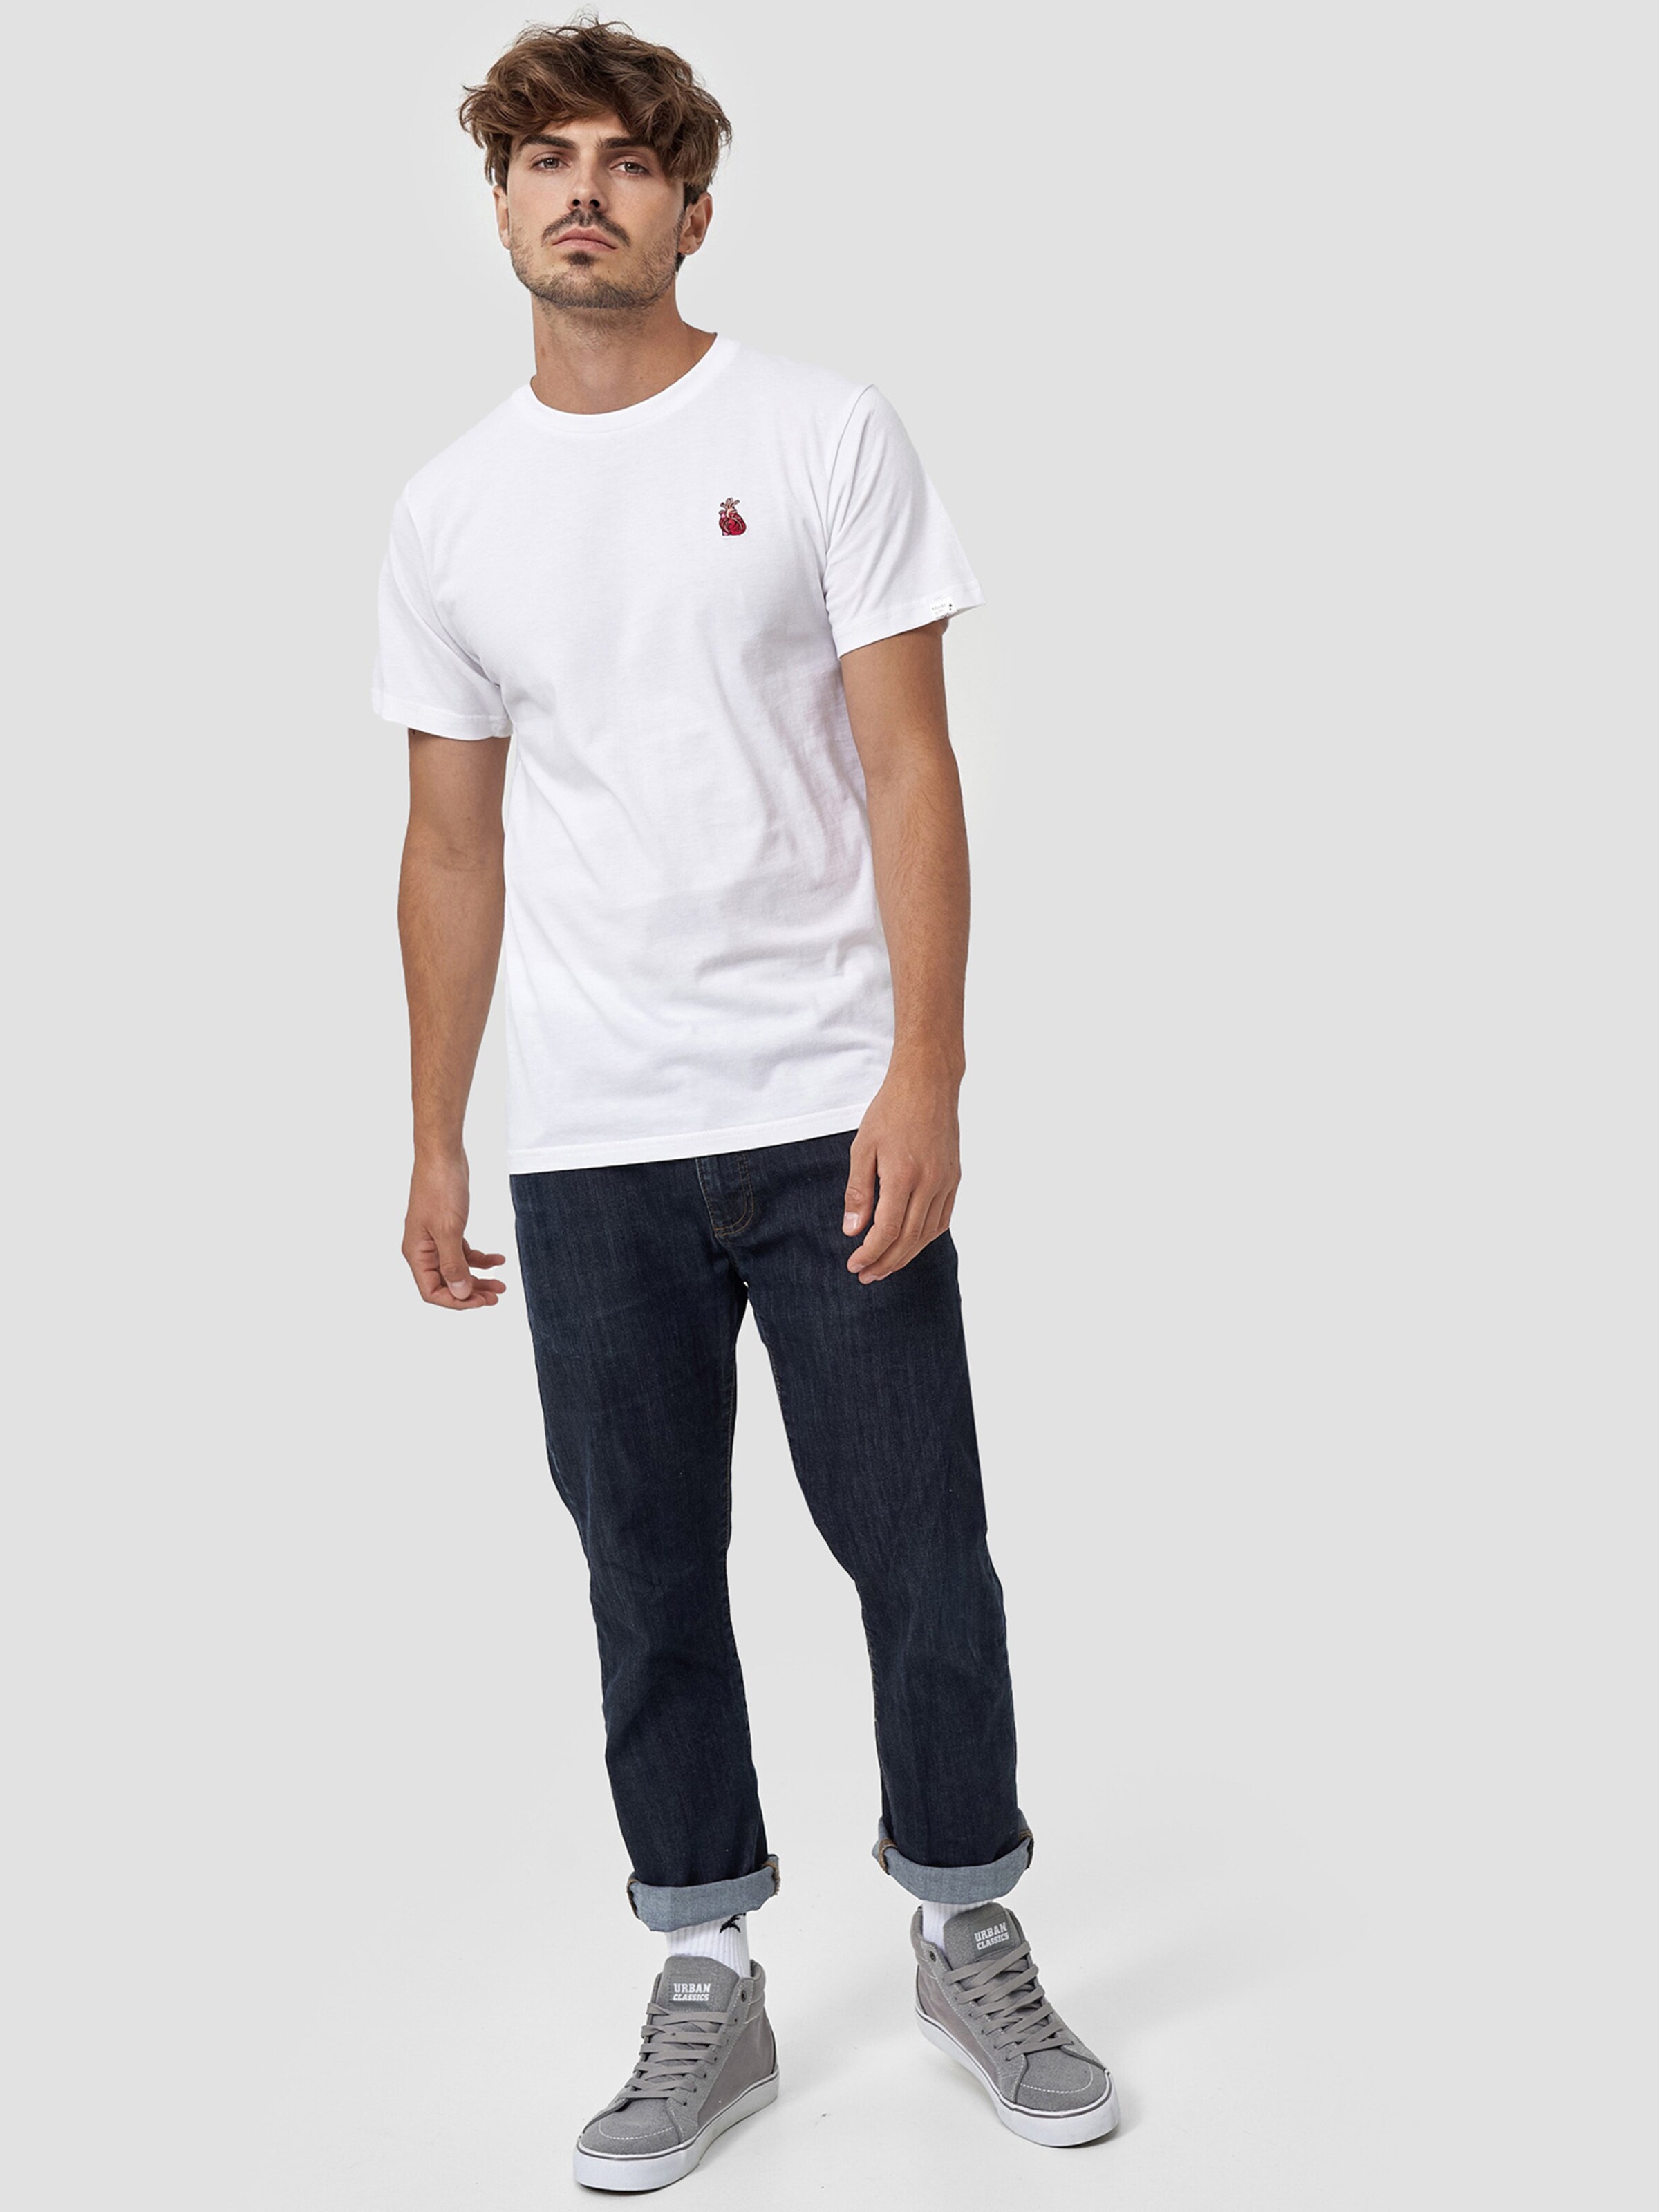 Männer Shirts Mikon T-Shirt 'Herz' in Weiß - UL76138